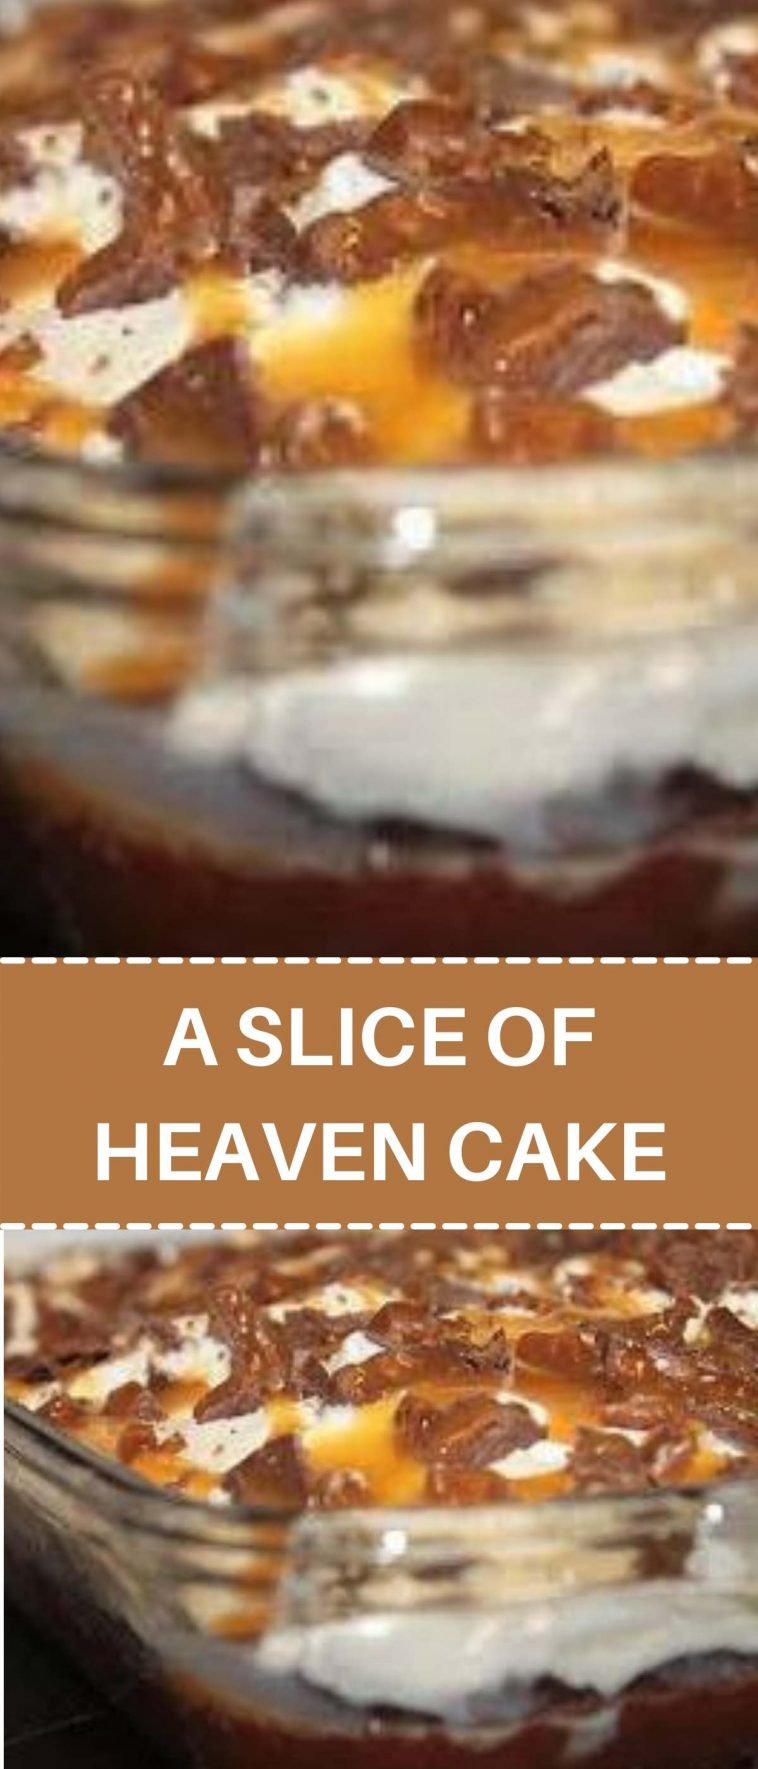 A SLICE OF HEAVEN CAKE